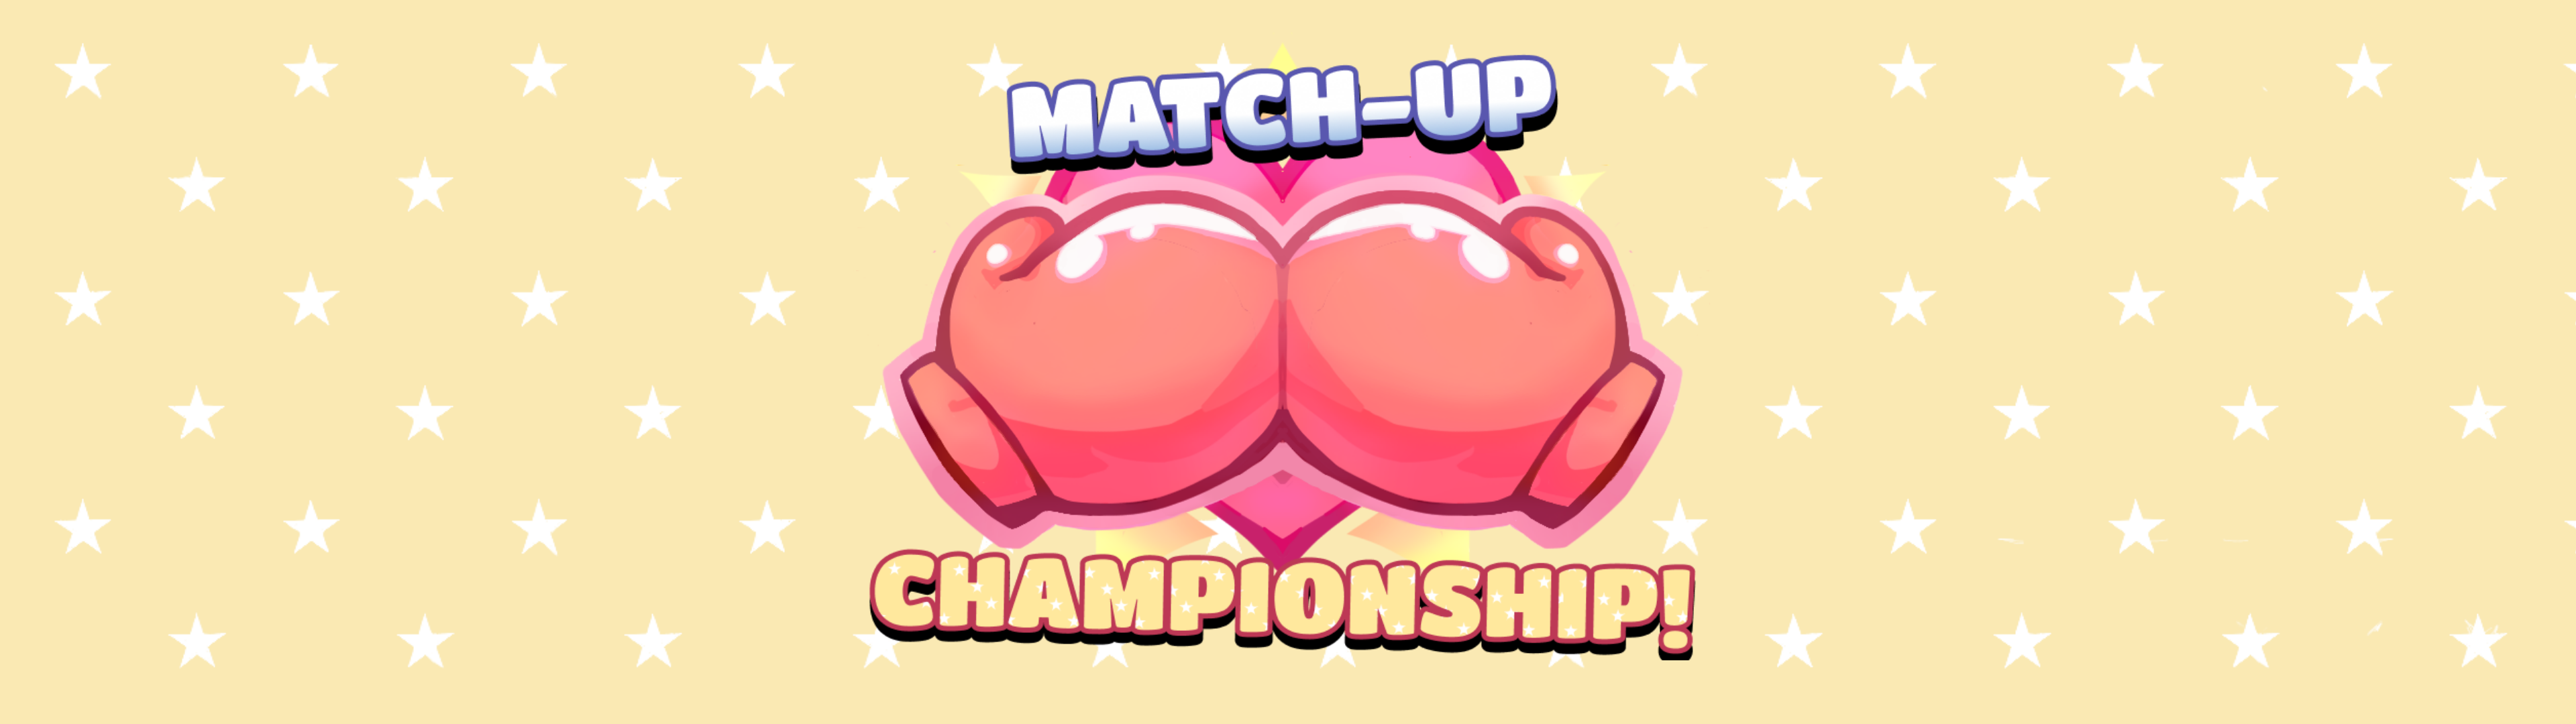 Match-Up Championship!